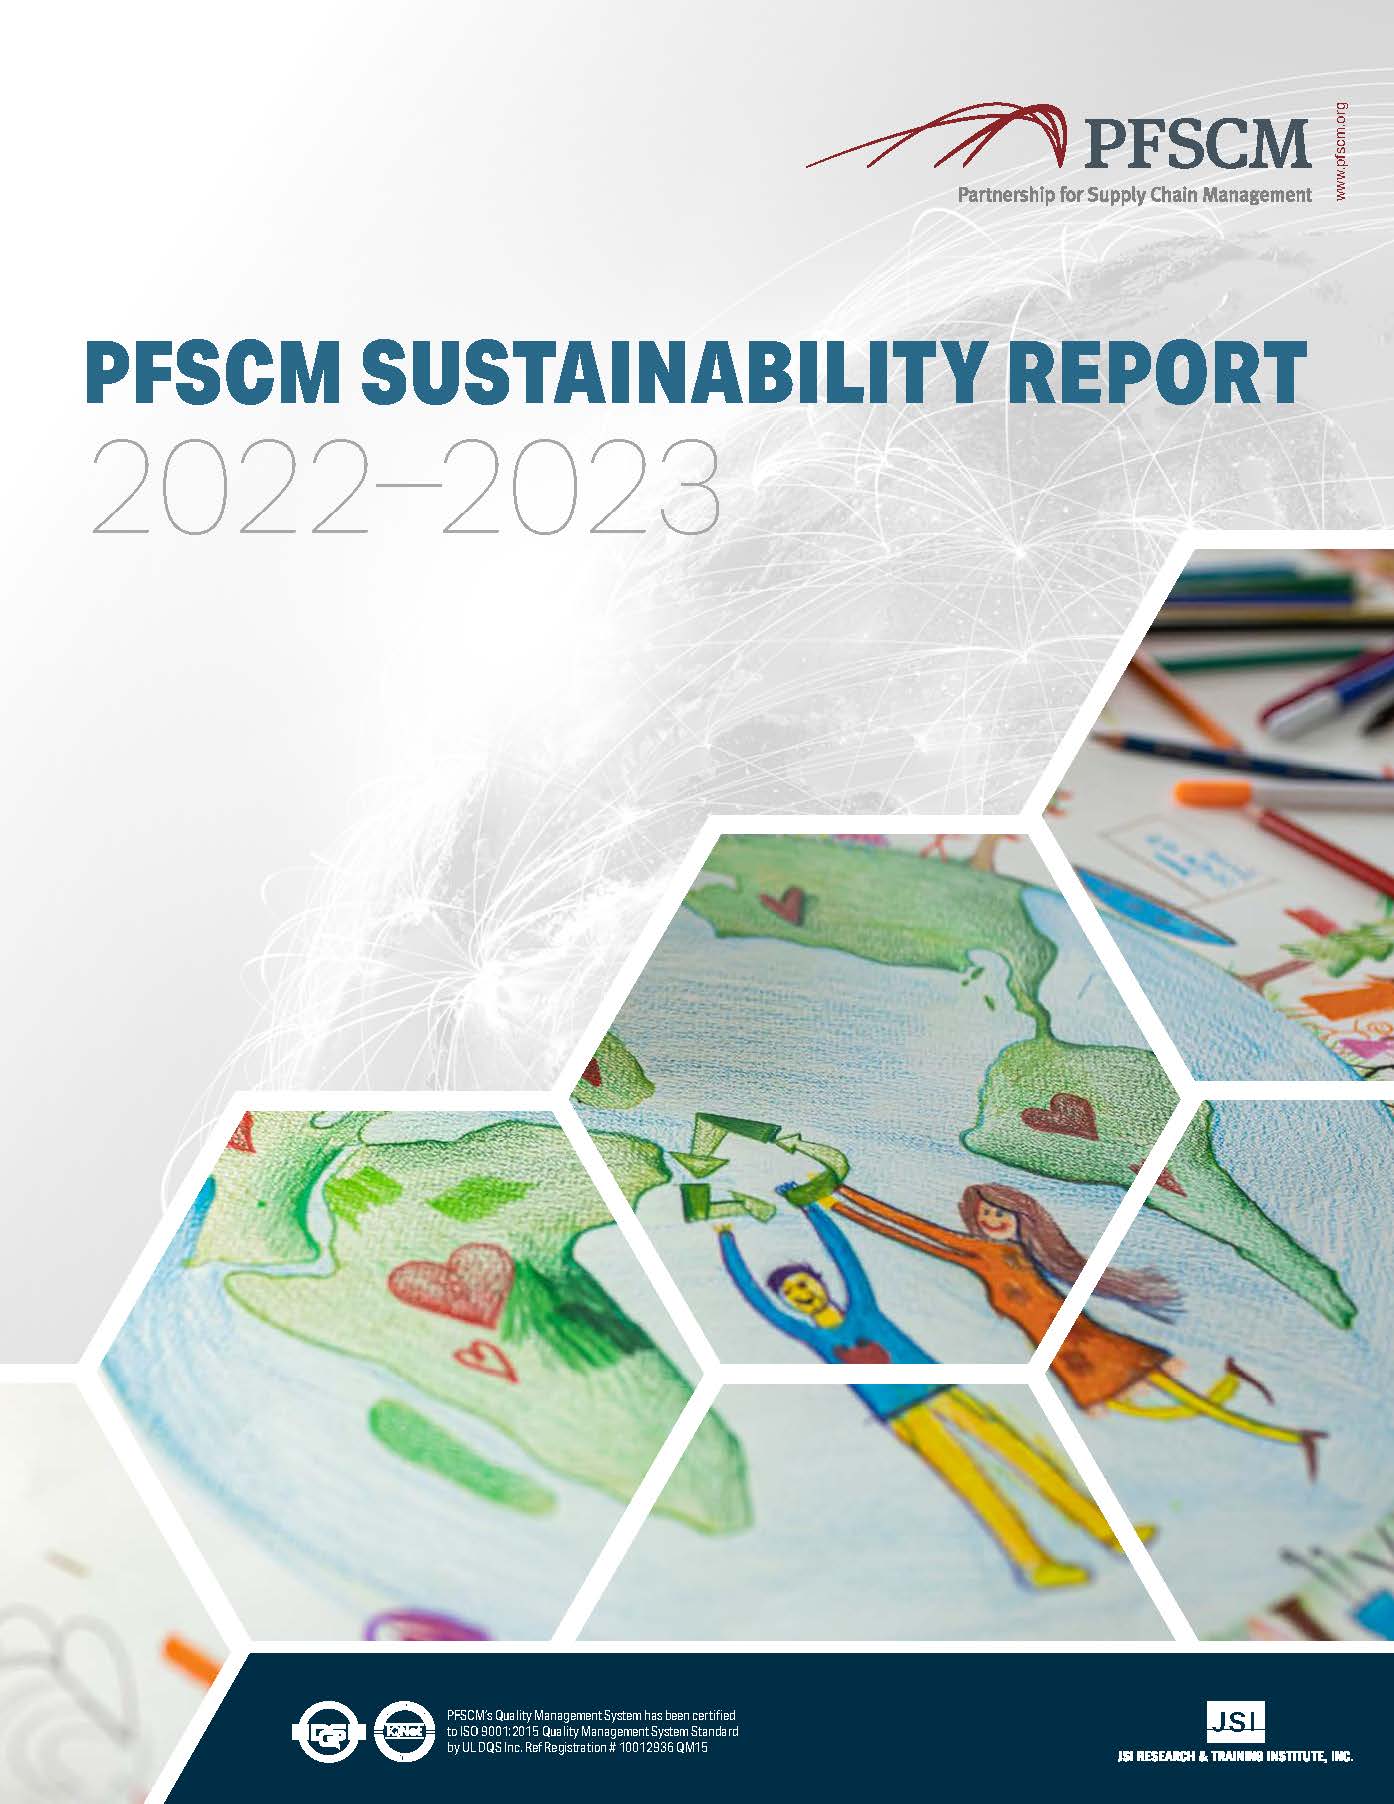 PFSCM's sustainability strategy